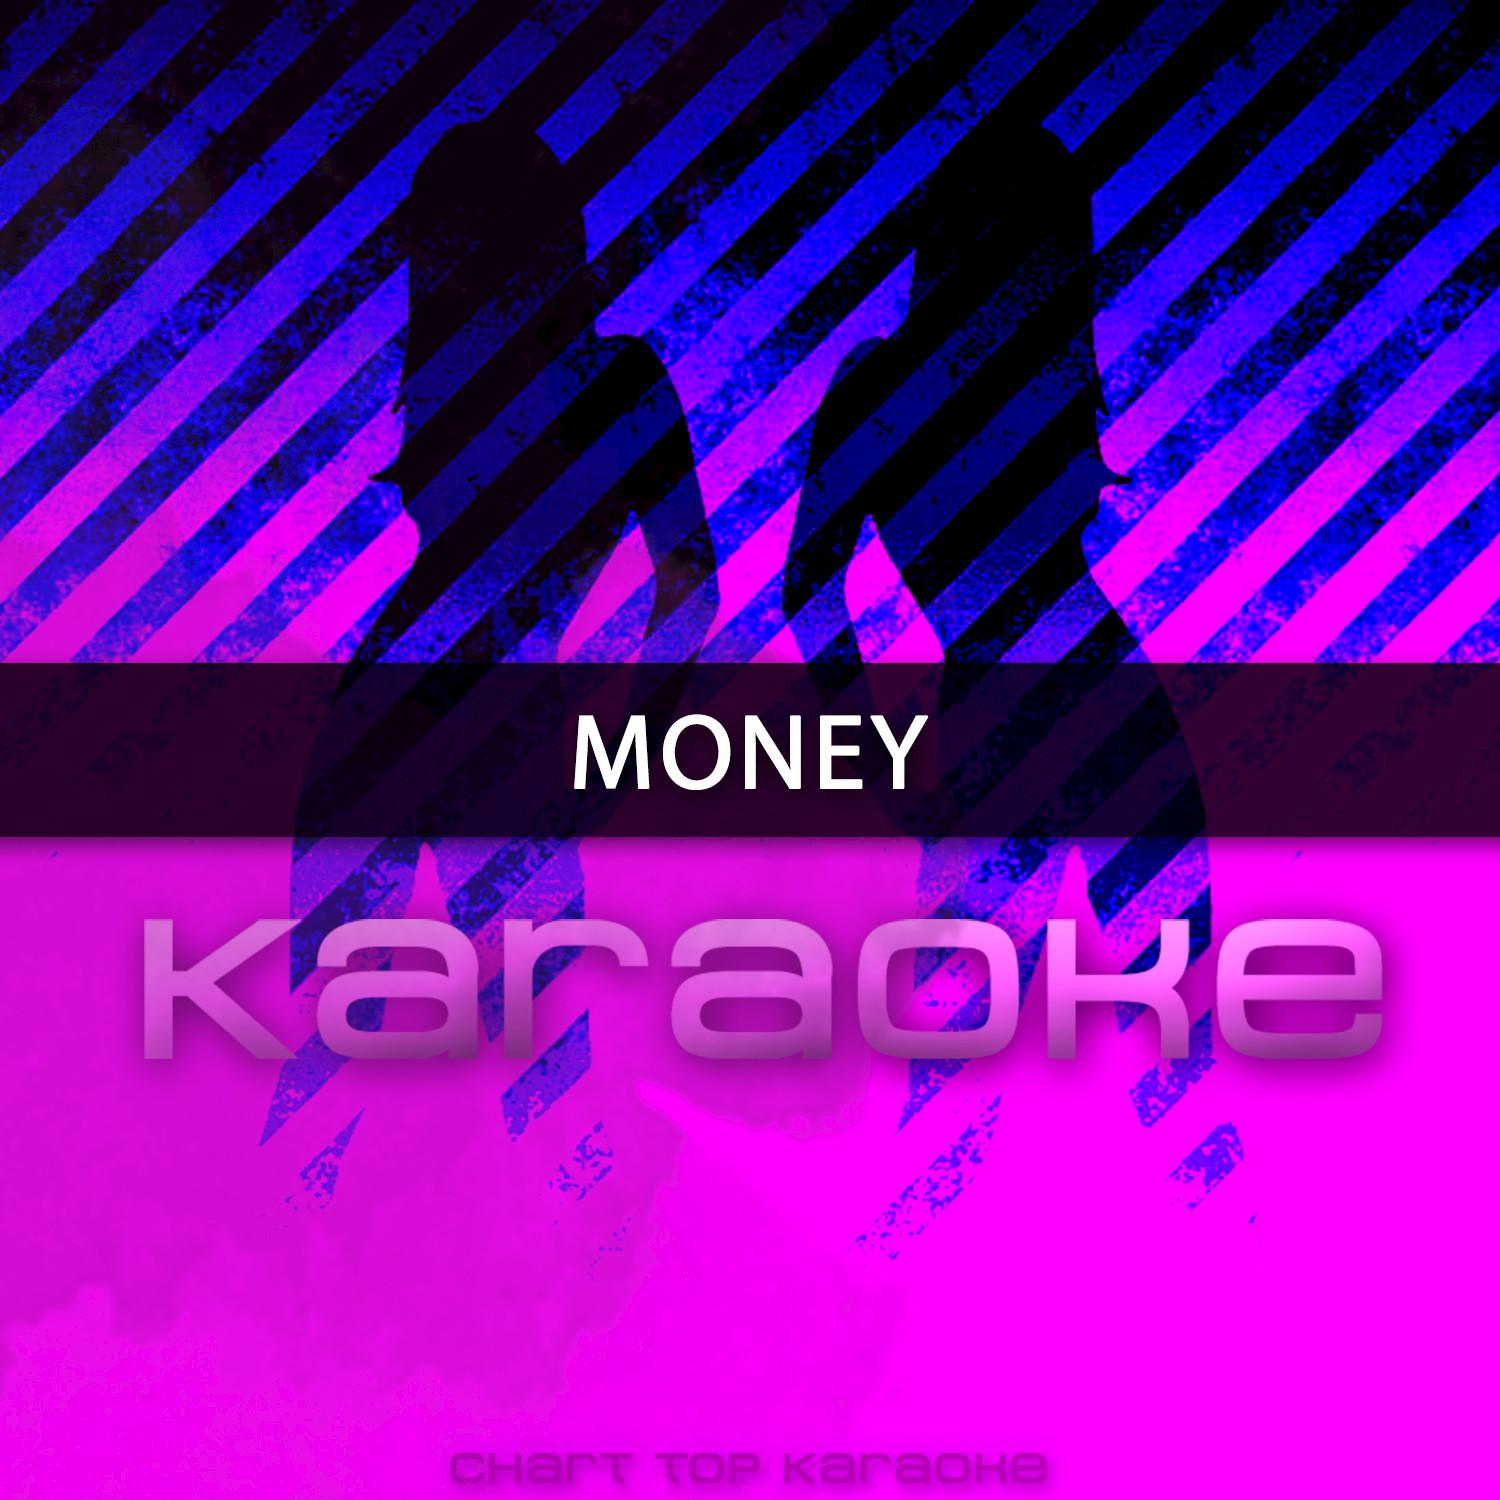 Money (Originally Performed by Cardi B) (Karaoke Version)